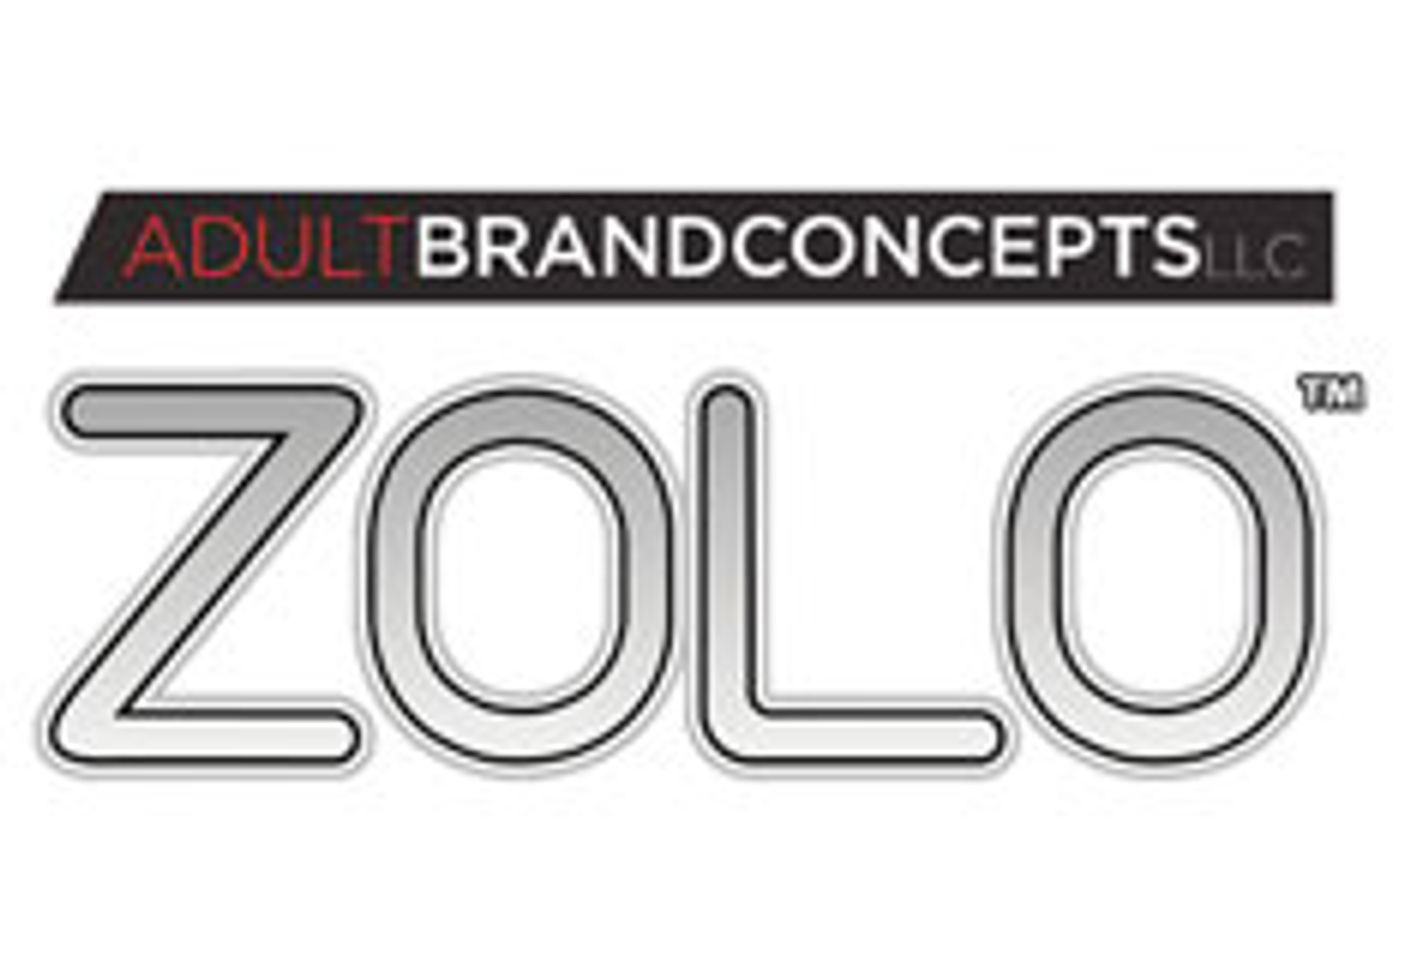 Zolo Pleasure System Nominated for 2014 StorErotica Award